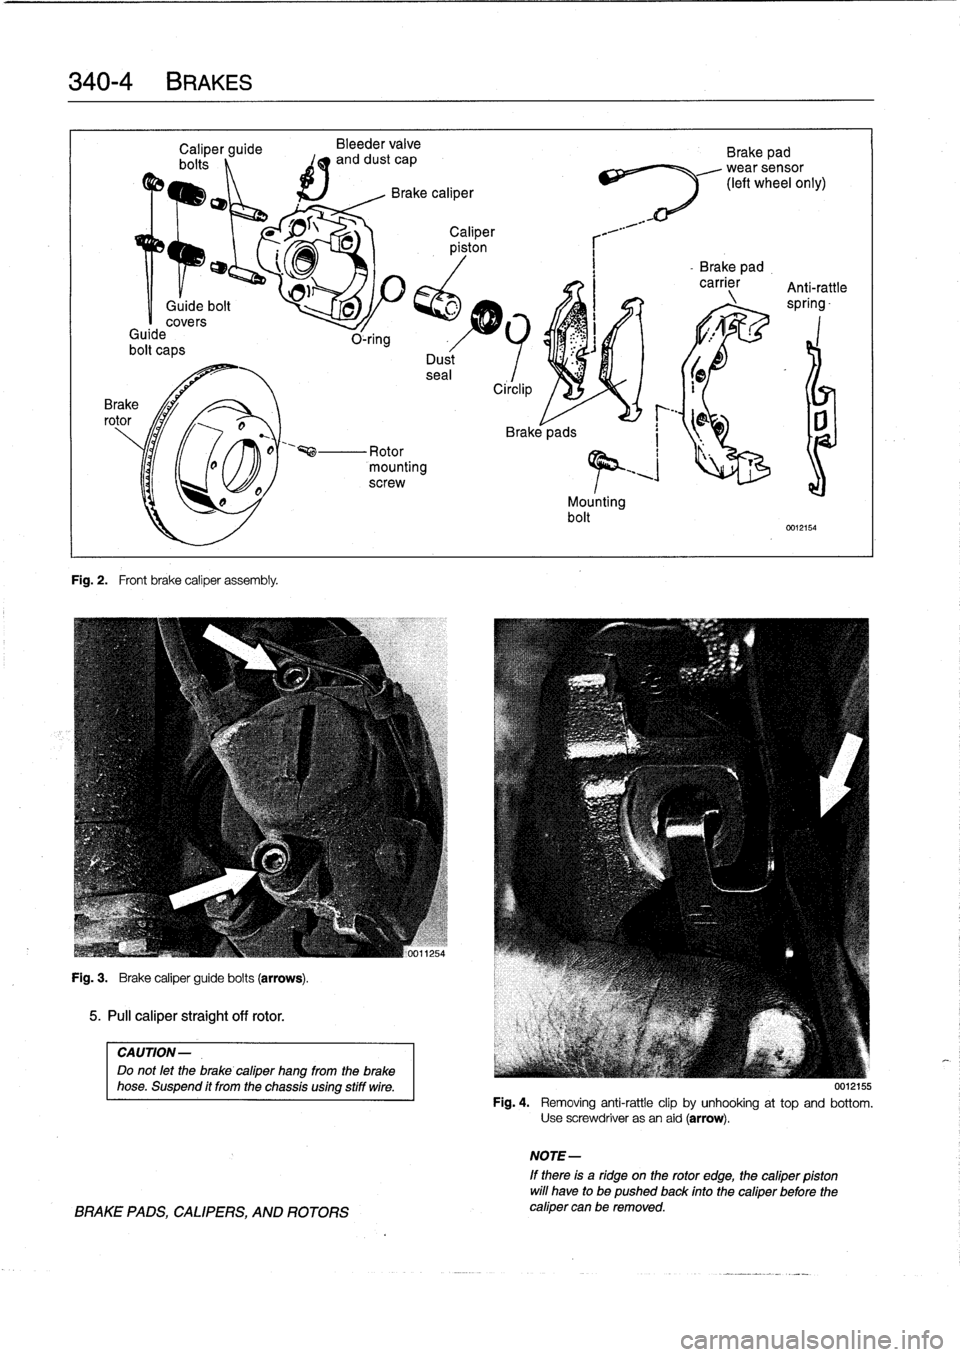 BMW 323i 1998 E36 Workshop Manual 
340-
4
BRAKES

Fig
.
2
.

	

Front
brake
caliper
assembly
.

Bleeder
valve
and
dust
cap

Mounting
bolt

Brake
pad
wearsensor
(left
wheel
only)

-
Brake
pad
.
carrier
Anti-rattle
^_
spring-

0012154

